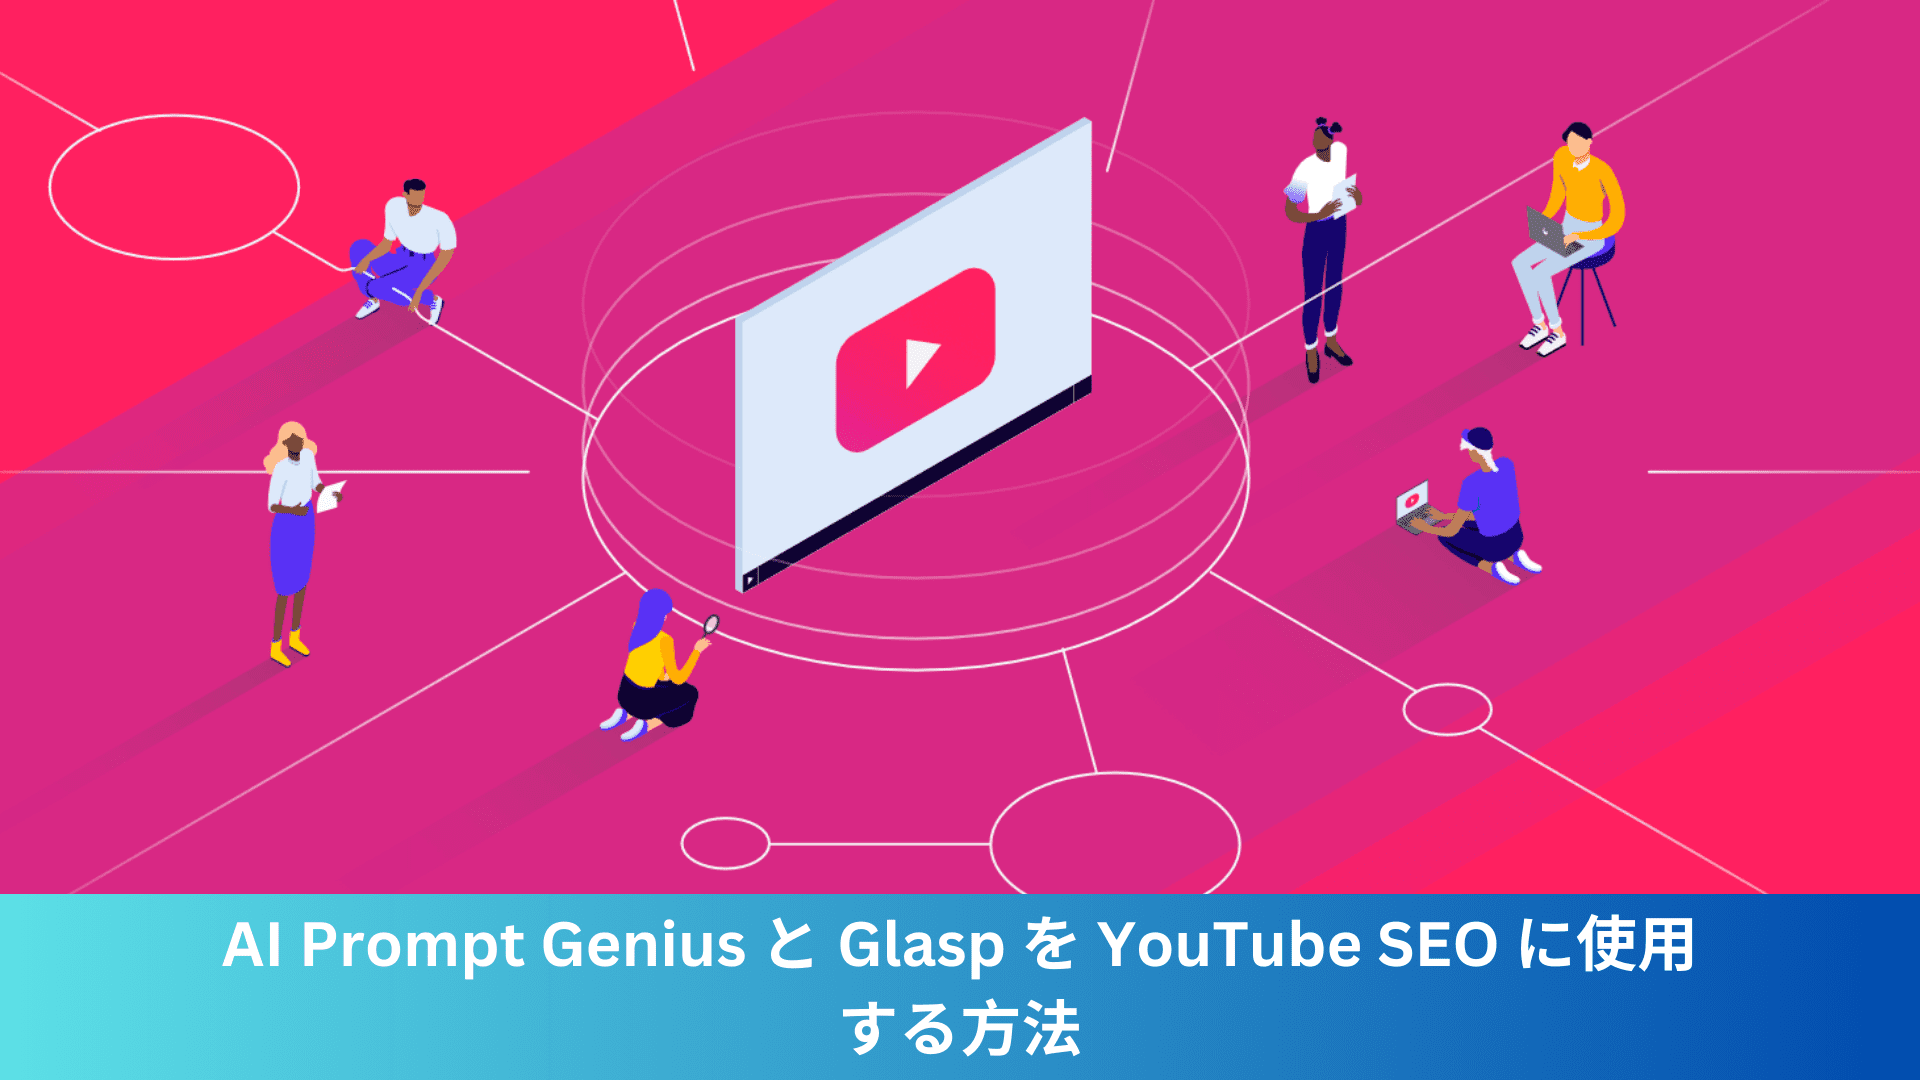 AI Prompt Genius と Glasp を YouTube SEO に使用する方法